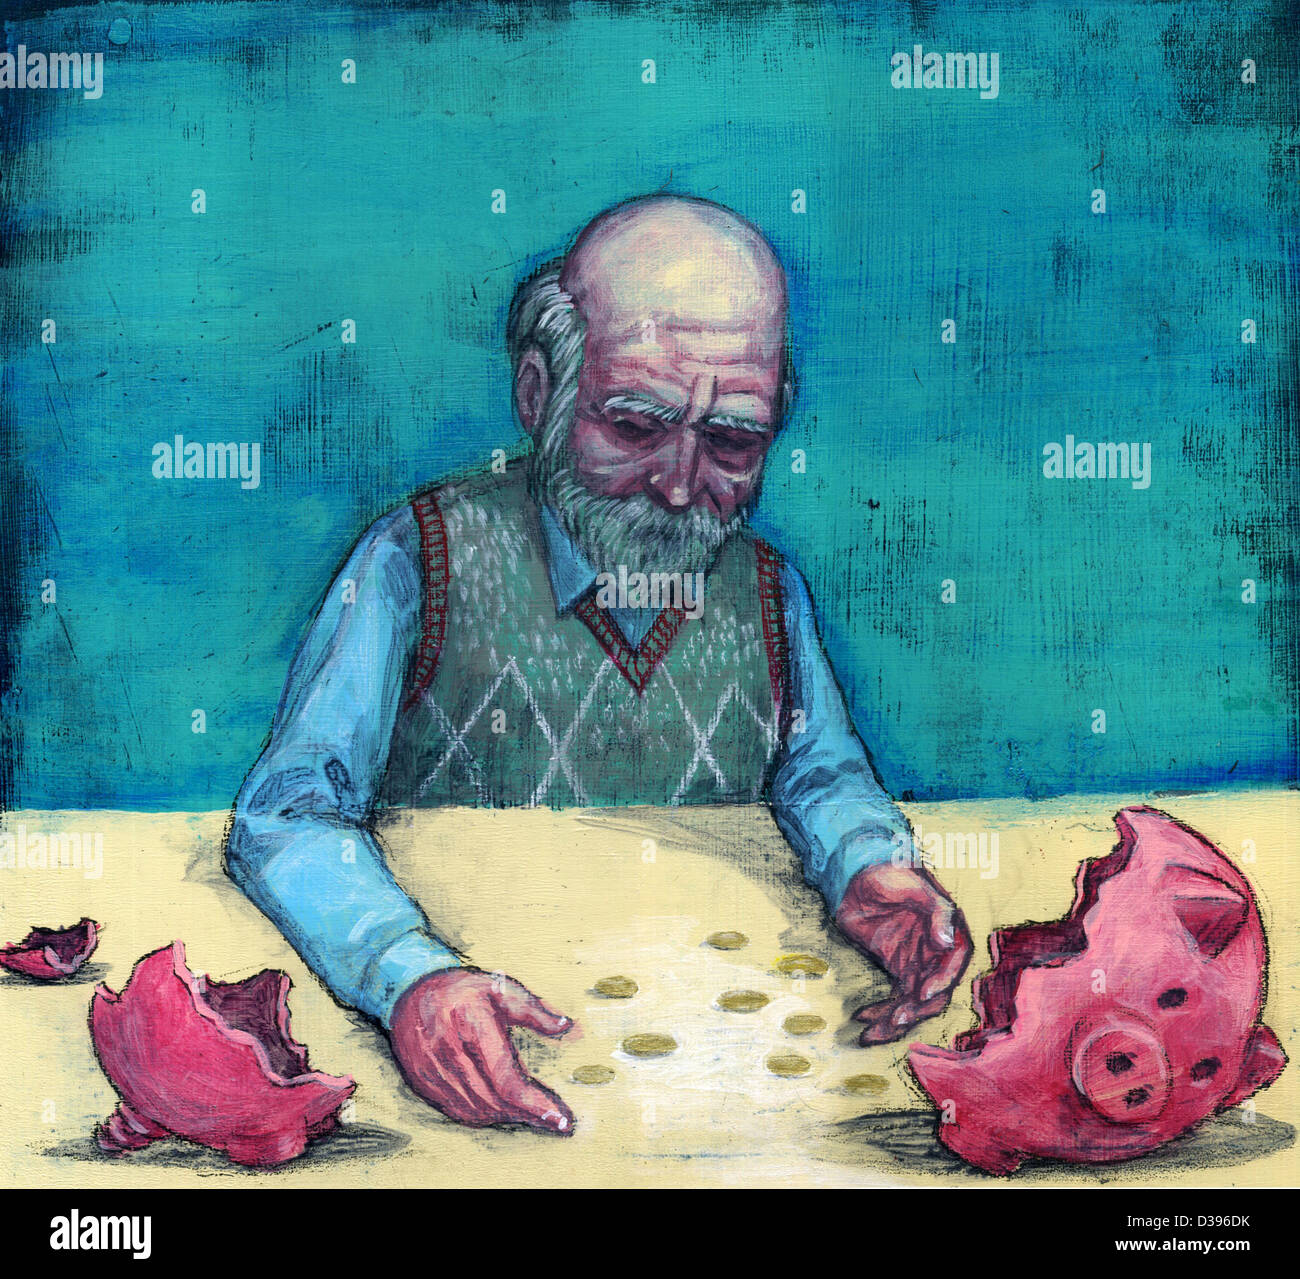 Conceptual illustration of elderly man with broken piggy bank Stock Photo